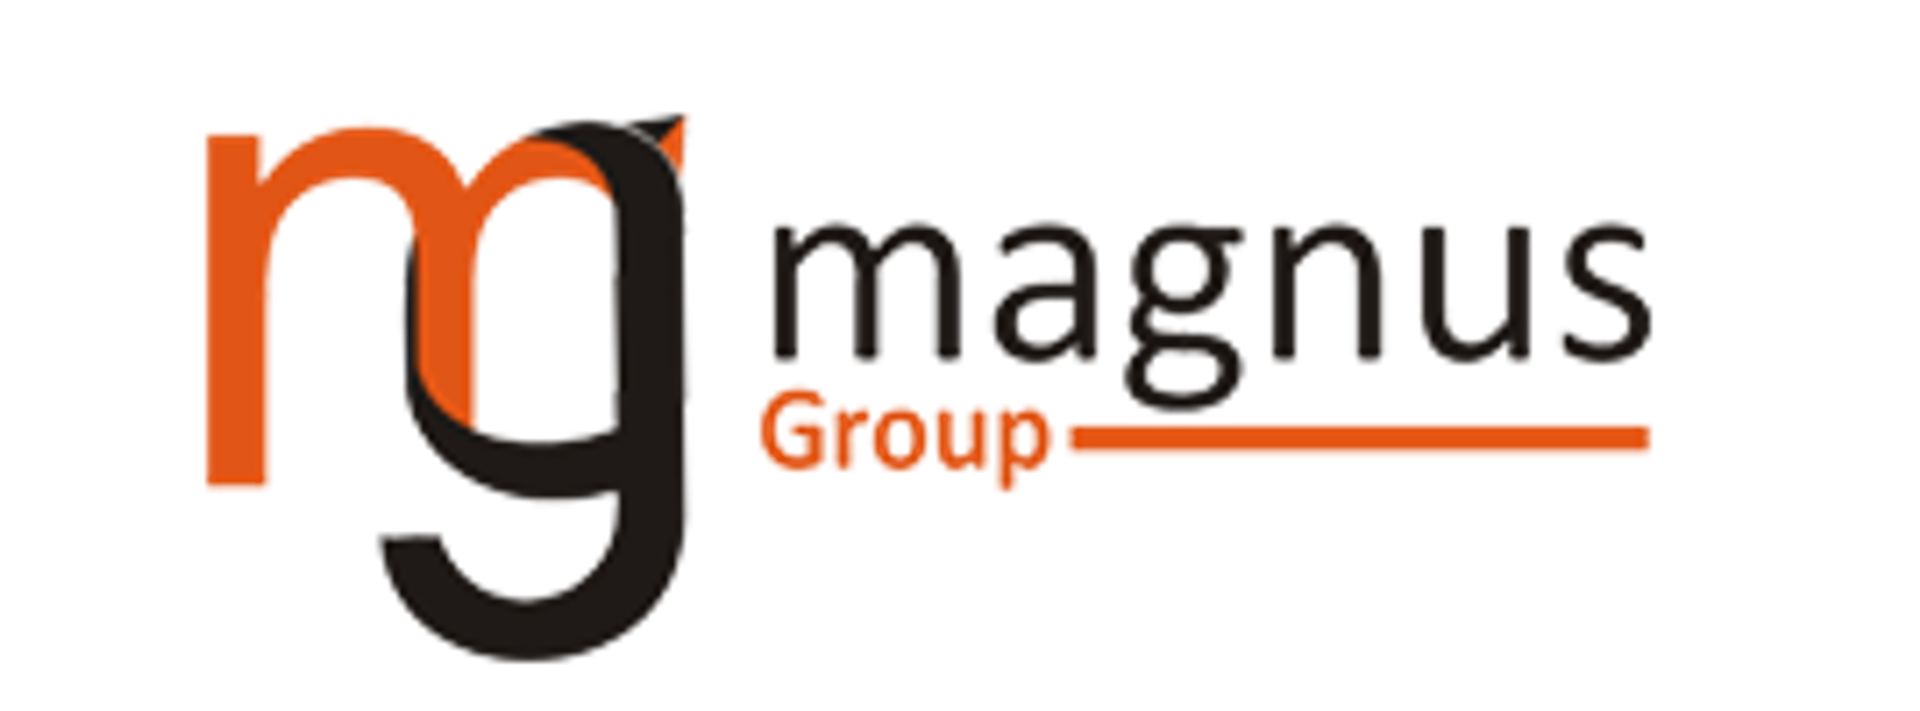 Magnus Group LLC